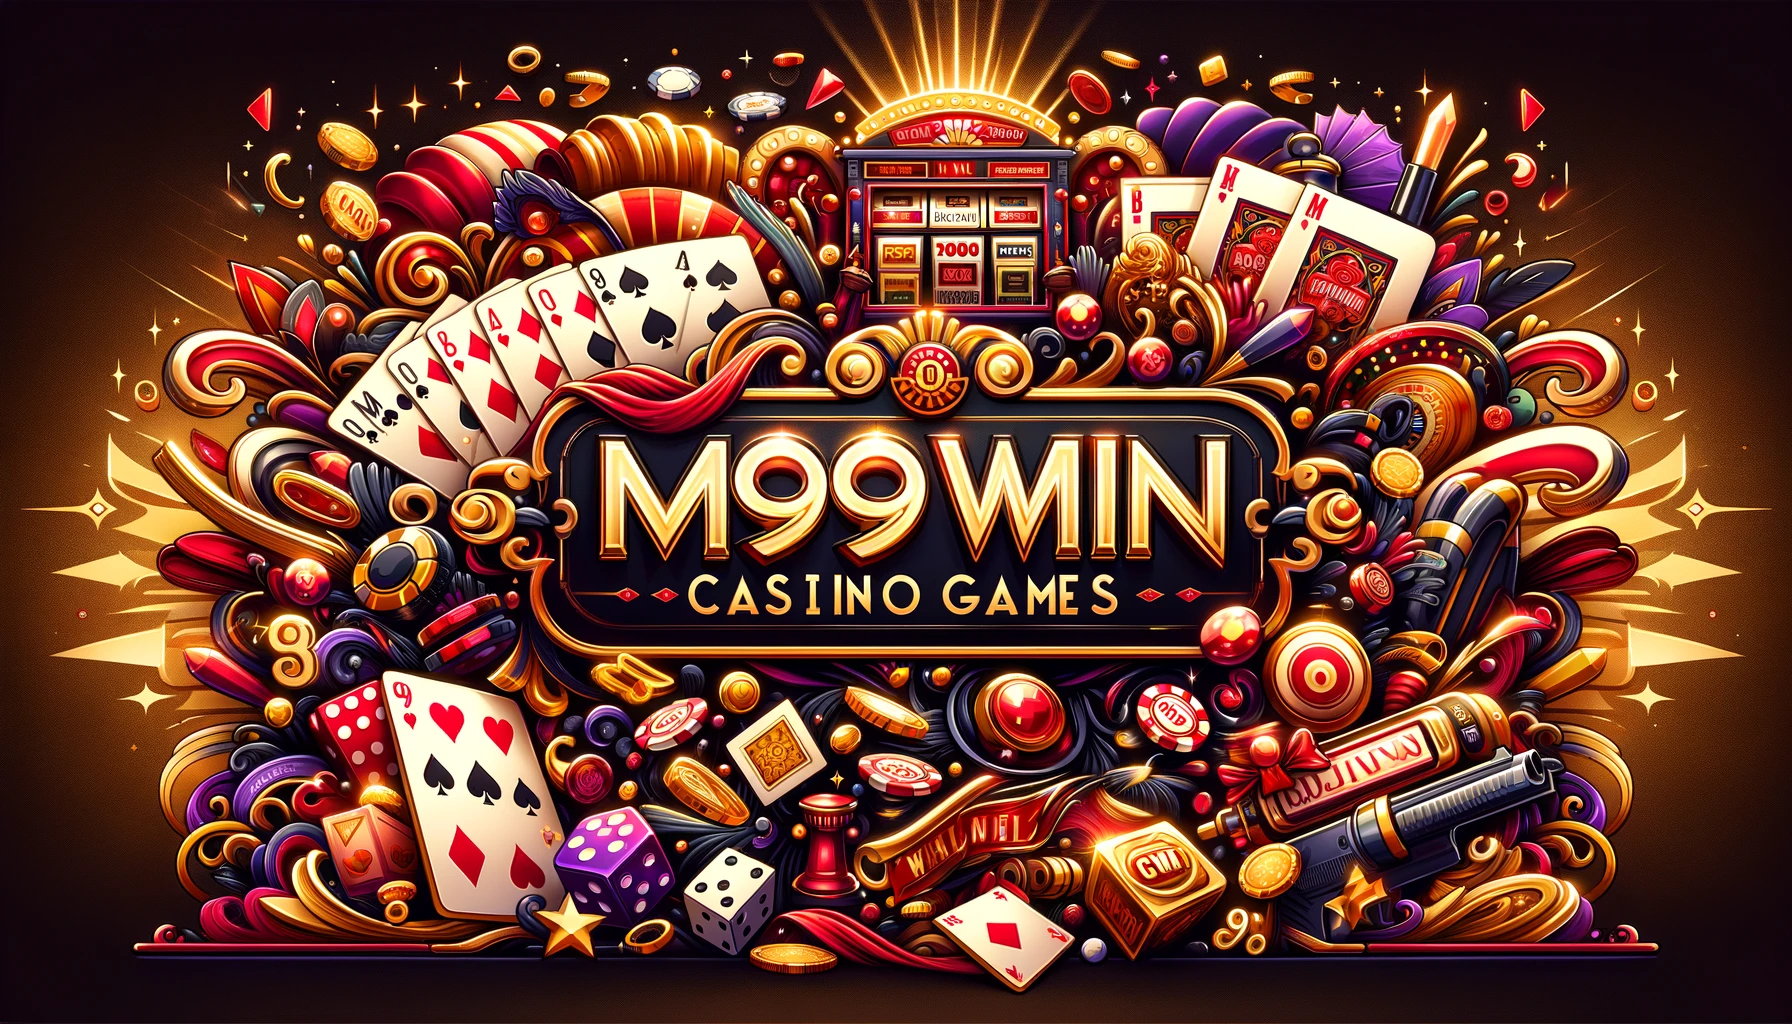 M99winsg Casino